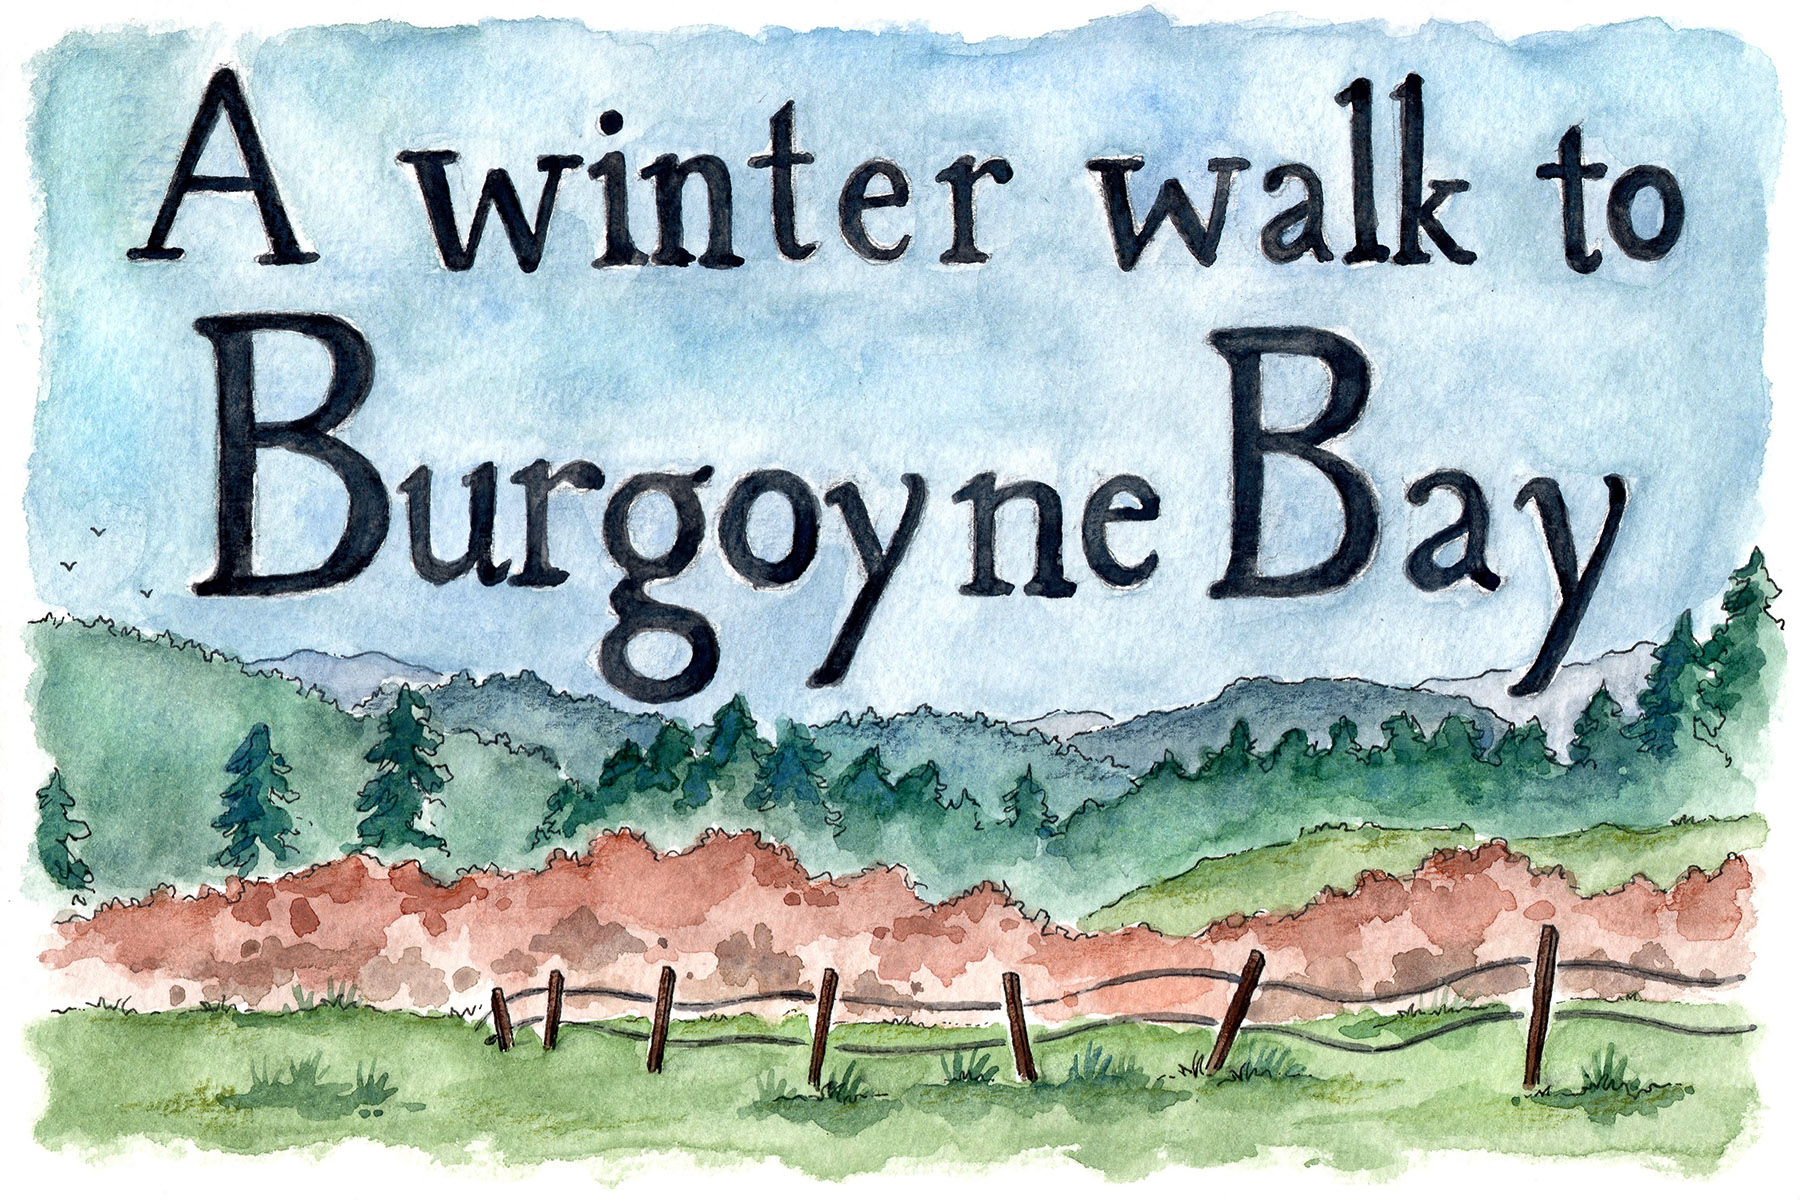 A watercolor wander to Burgoyne Bay.